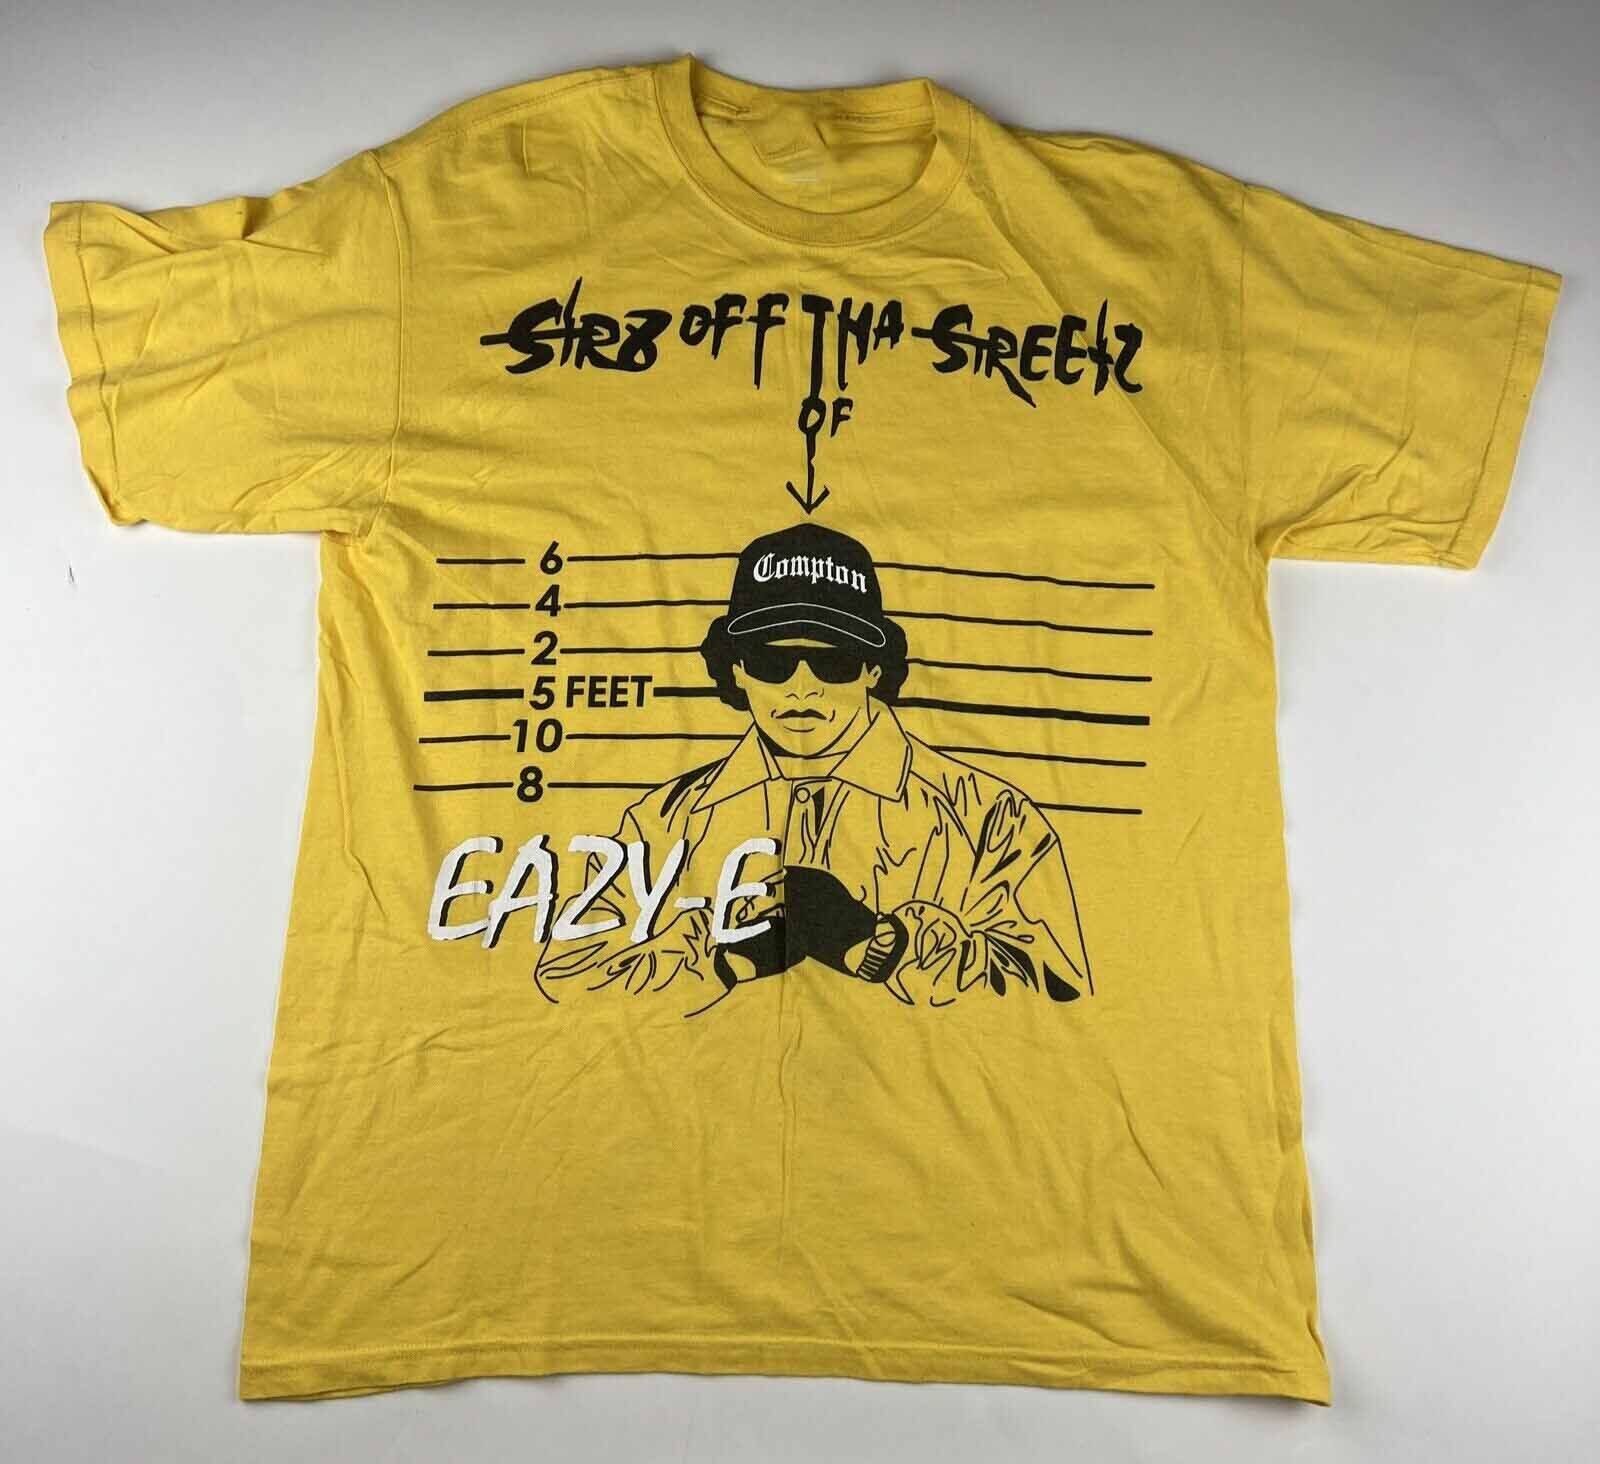 Eazy-E Str8 Off Tha Streetz Of Compton Shirt Classic Yellow Unisex S-3XL RE298